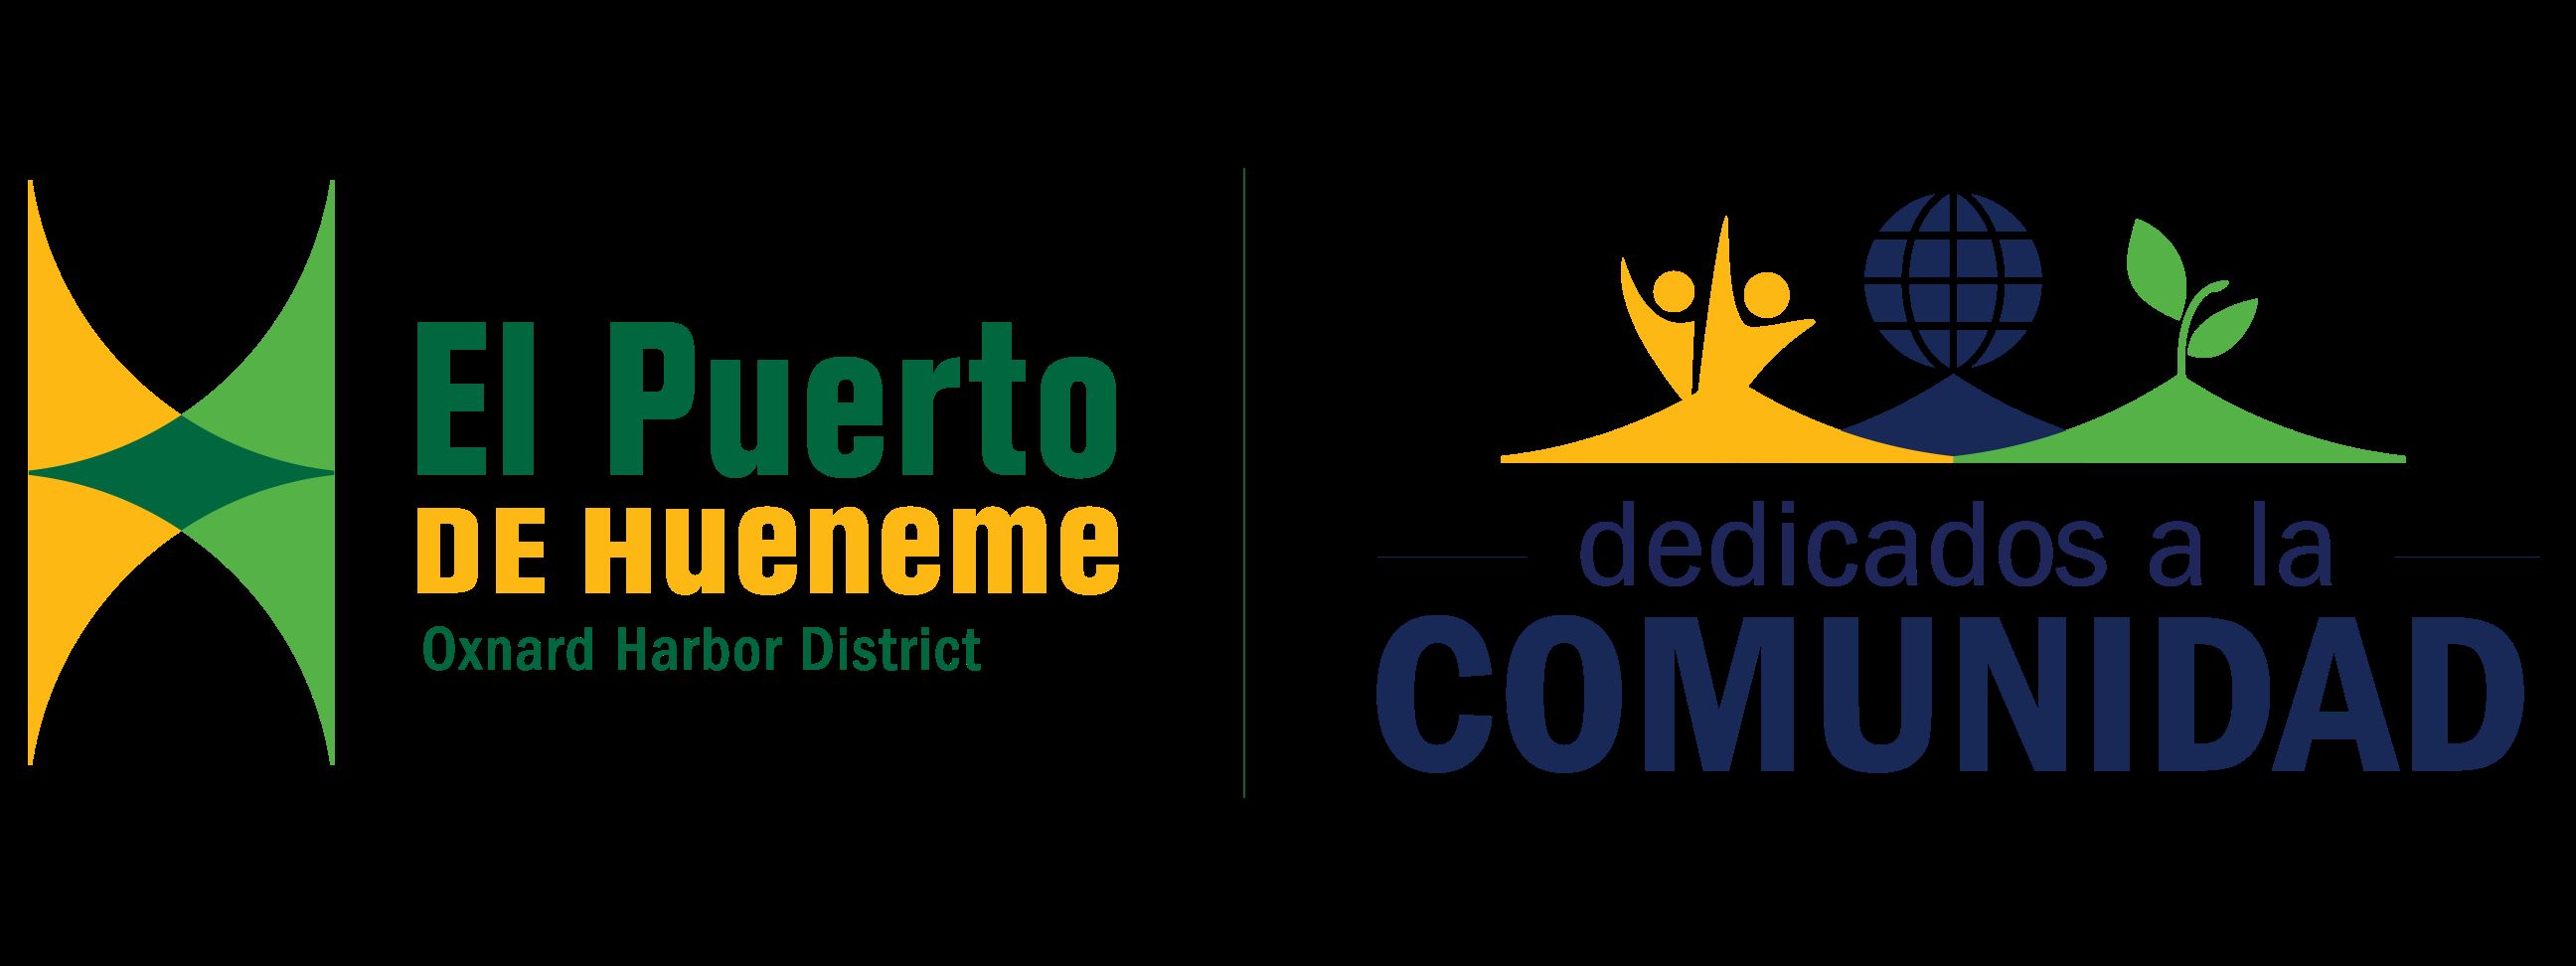 port of hueneme community logo en espanol